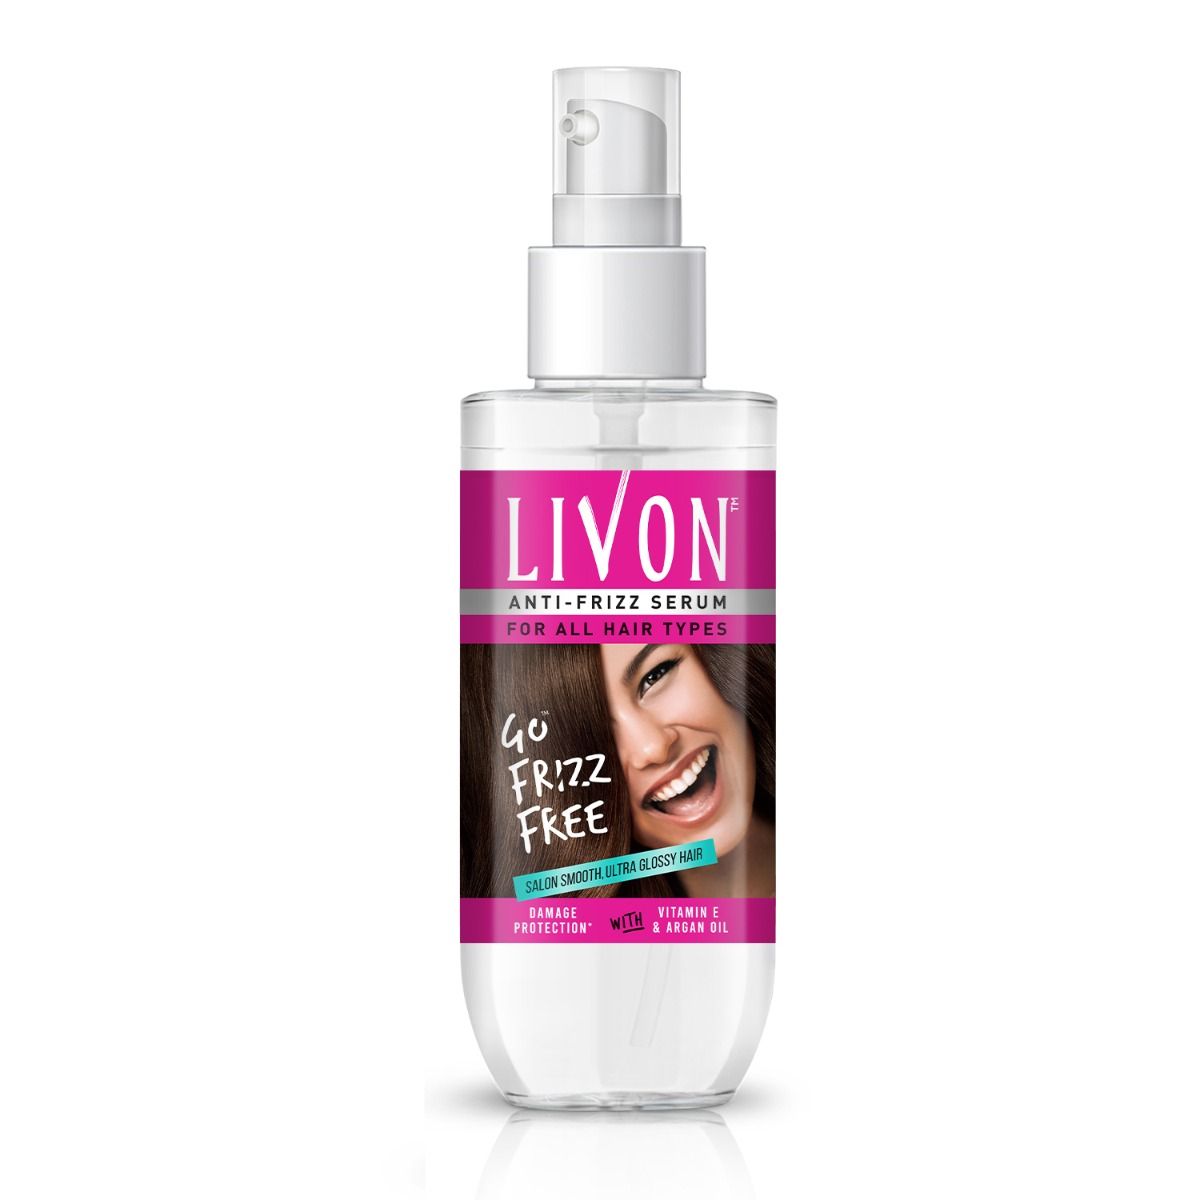 Livon Silky Potion Hair Serum Price  Buy Online at 268 in India